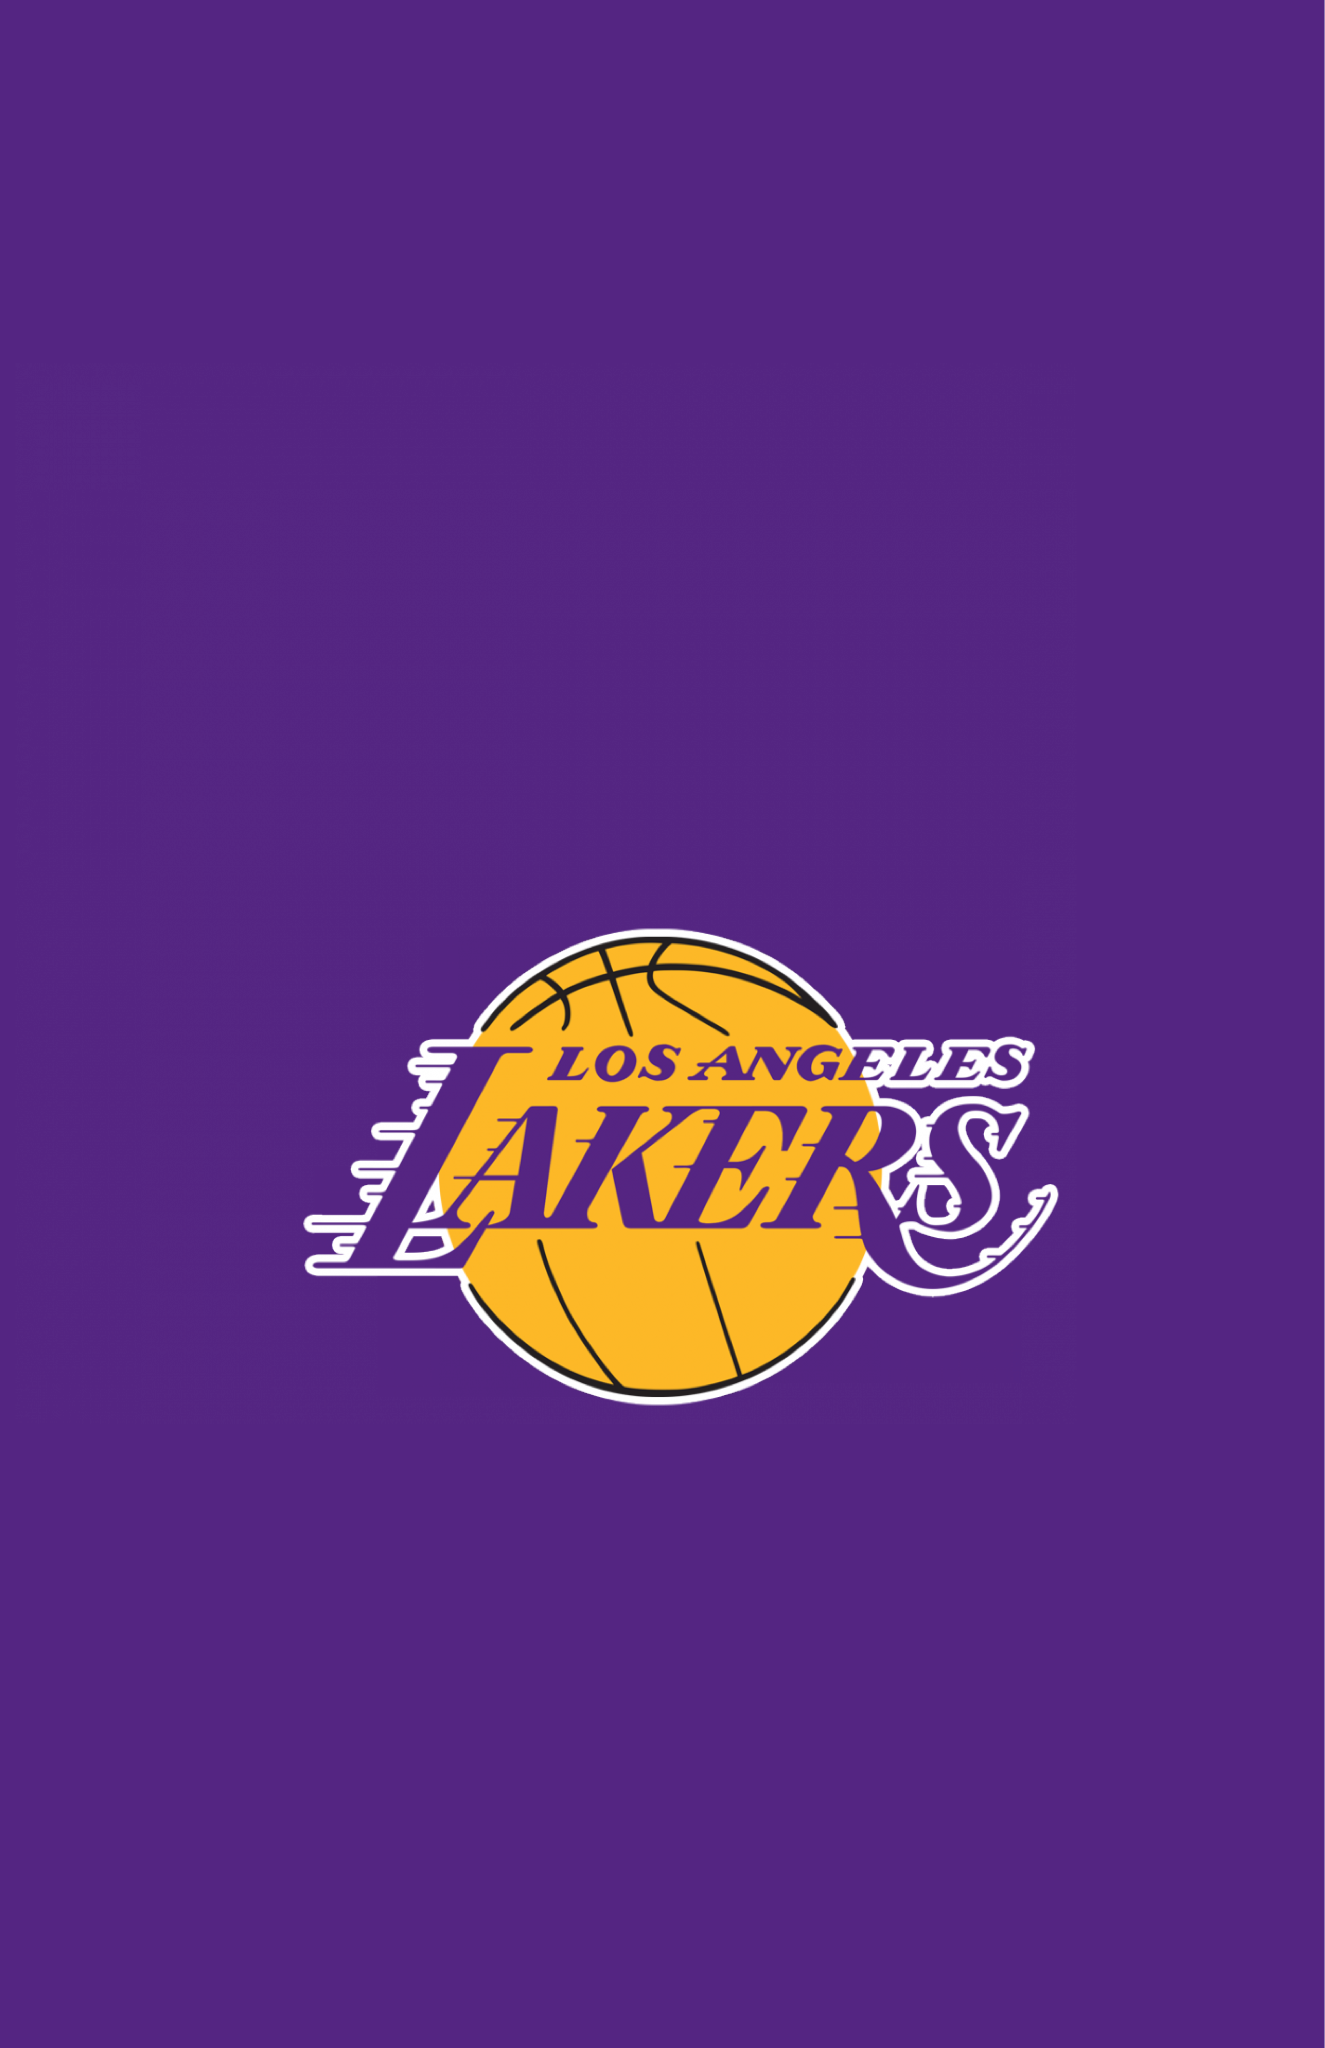 Lakers wallpaper ideas. lakers wallpaper, lakers, lakers logo